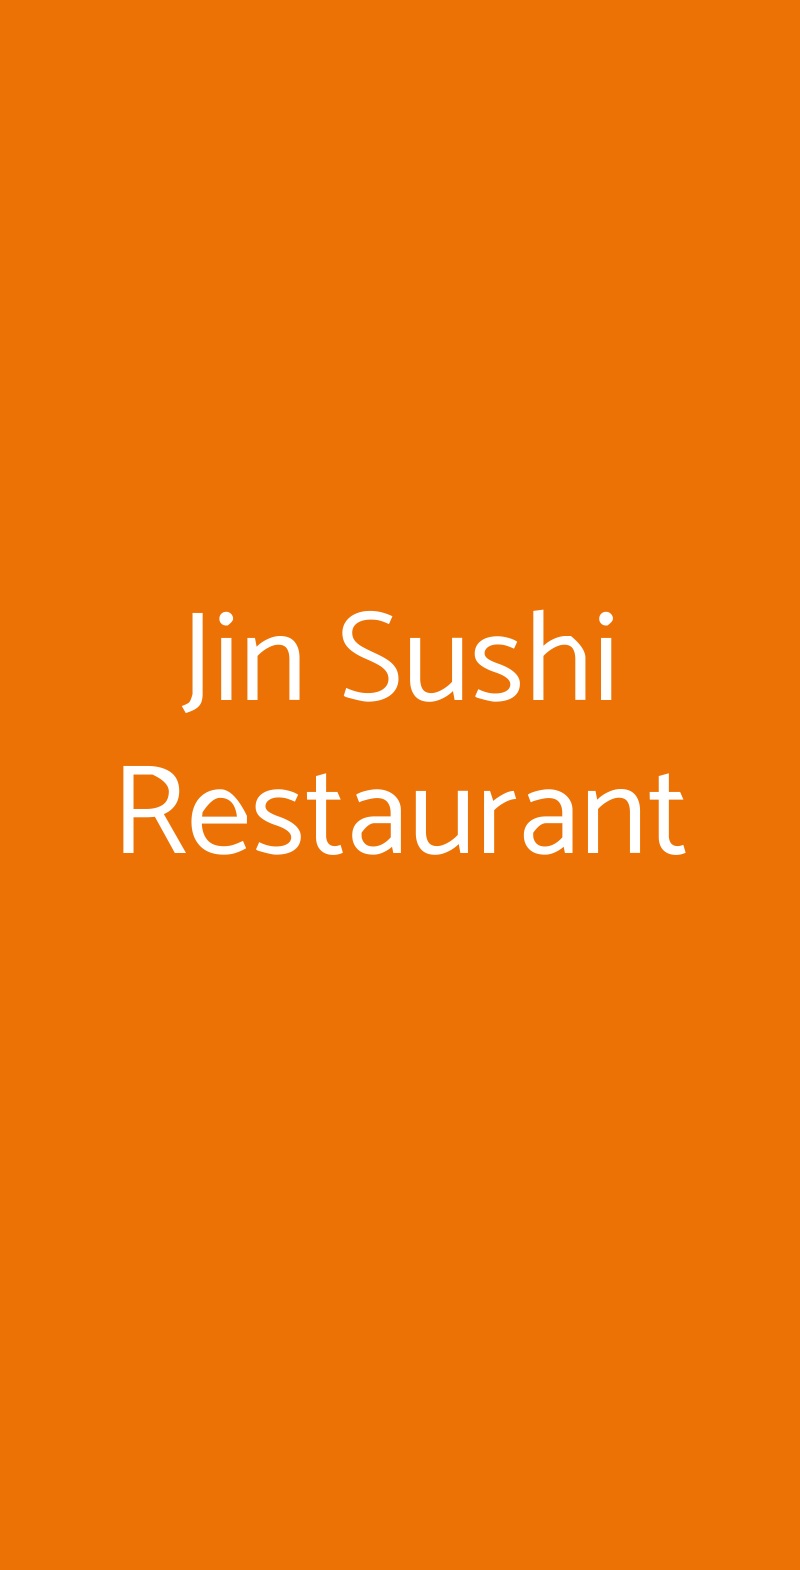 Jin Sushi Restaurant Milano menù 1 pagina